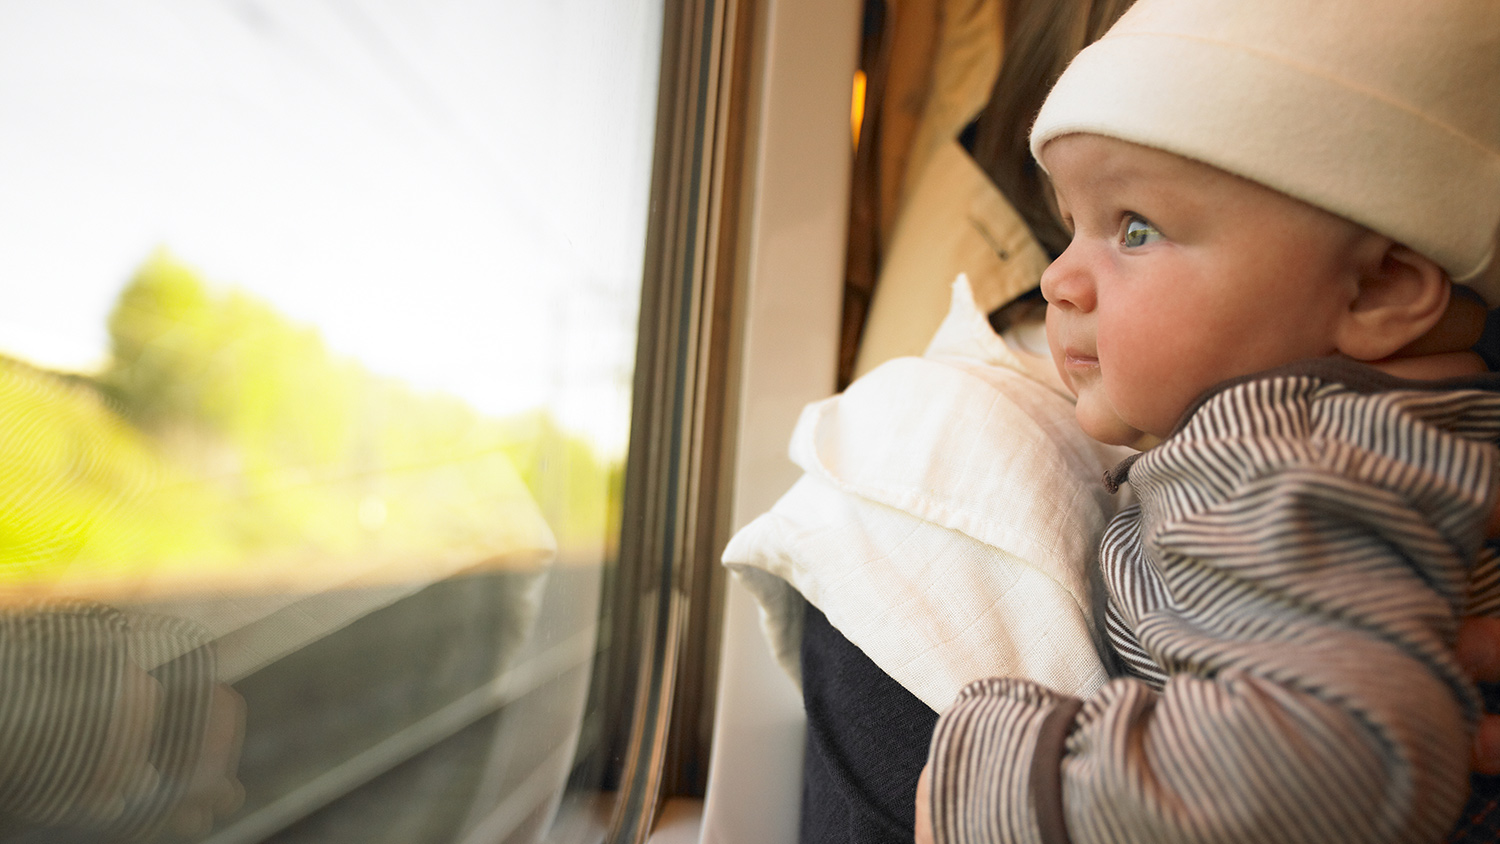 Baby on train